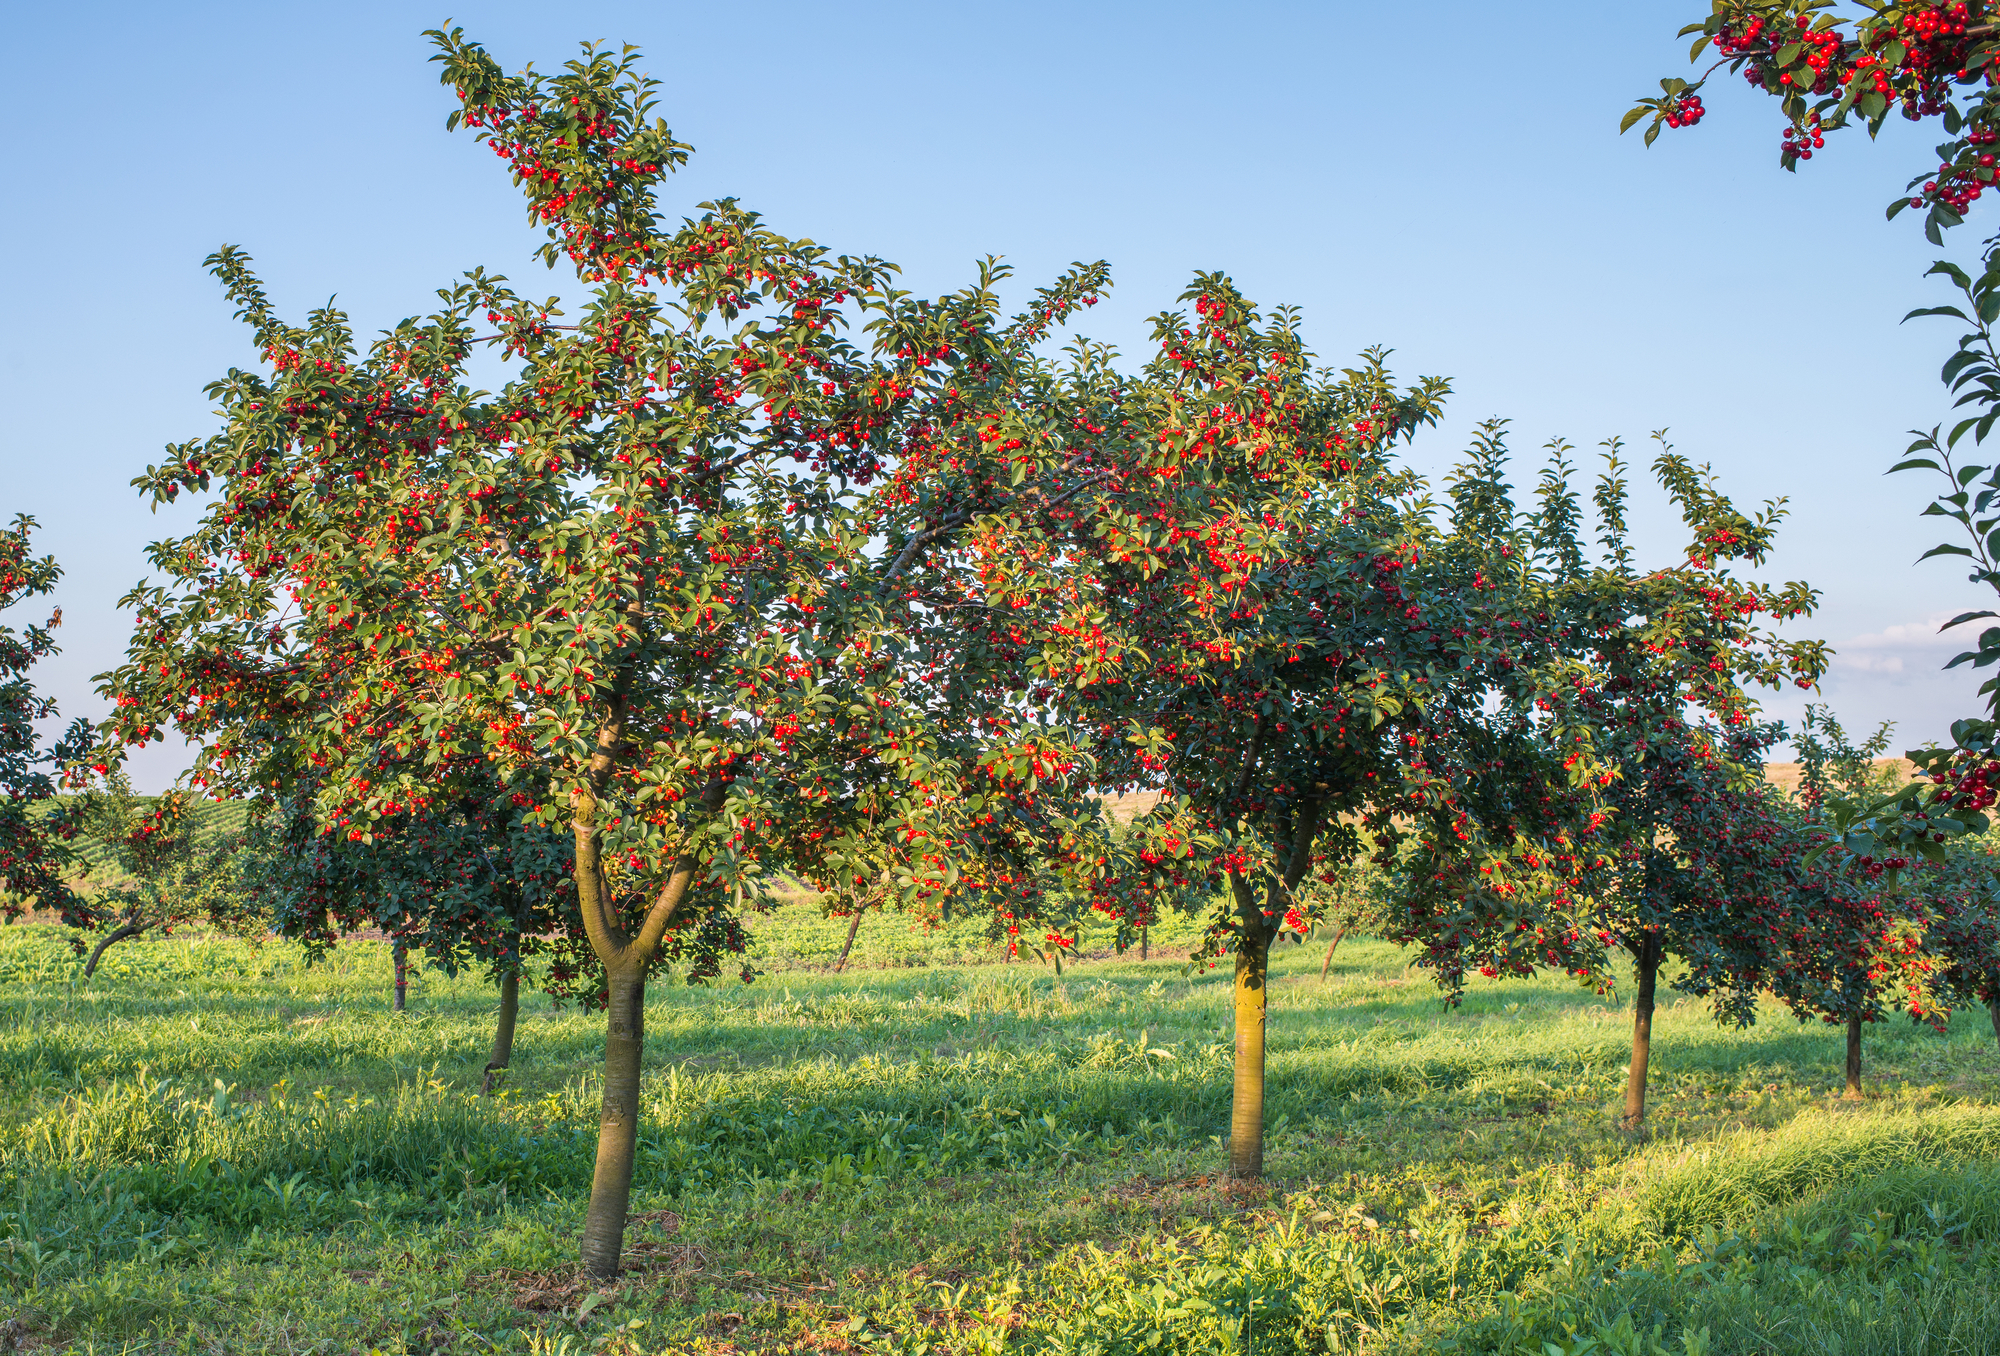 Ripening cherries on orchard tree